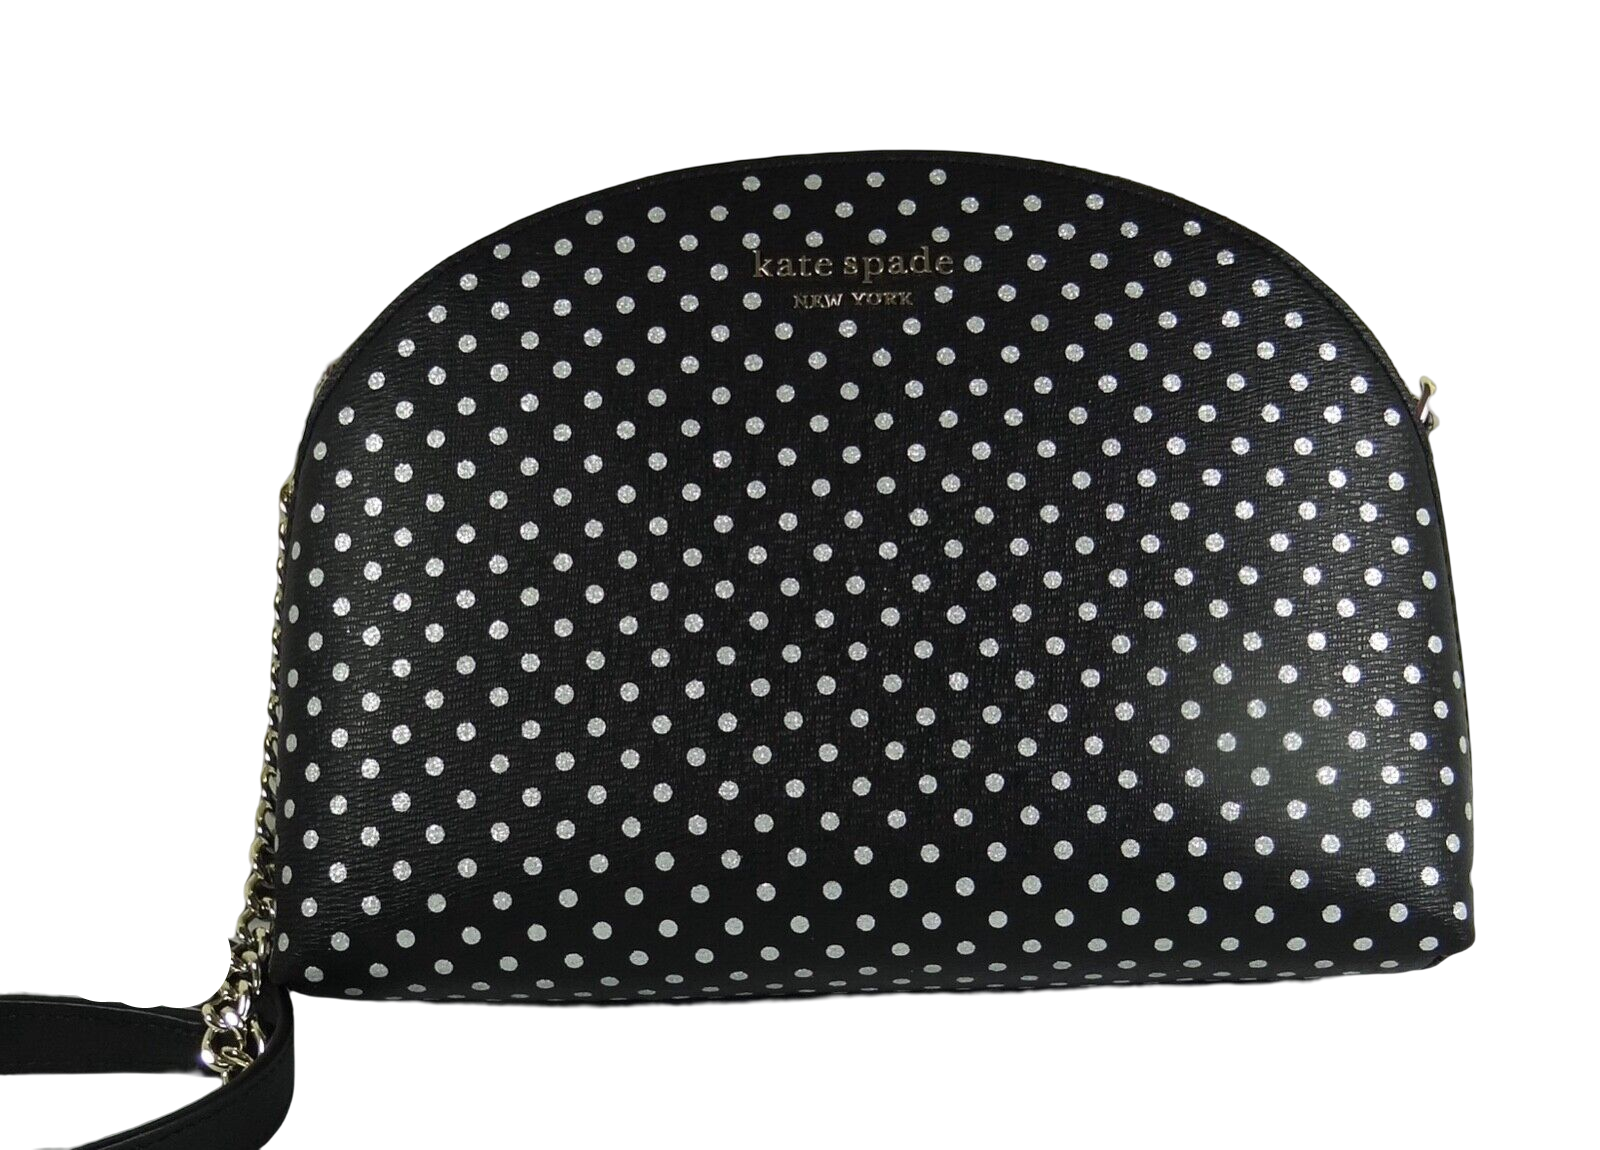 New Kate Spade Small Dome Crossbody Smooth PVC Purse Handbag